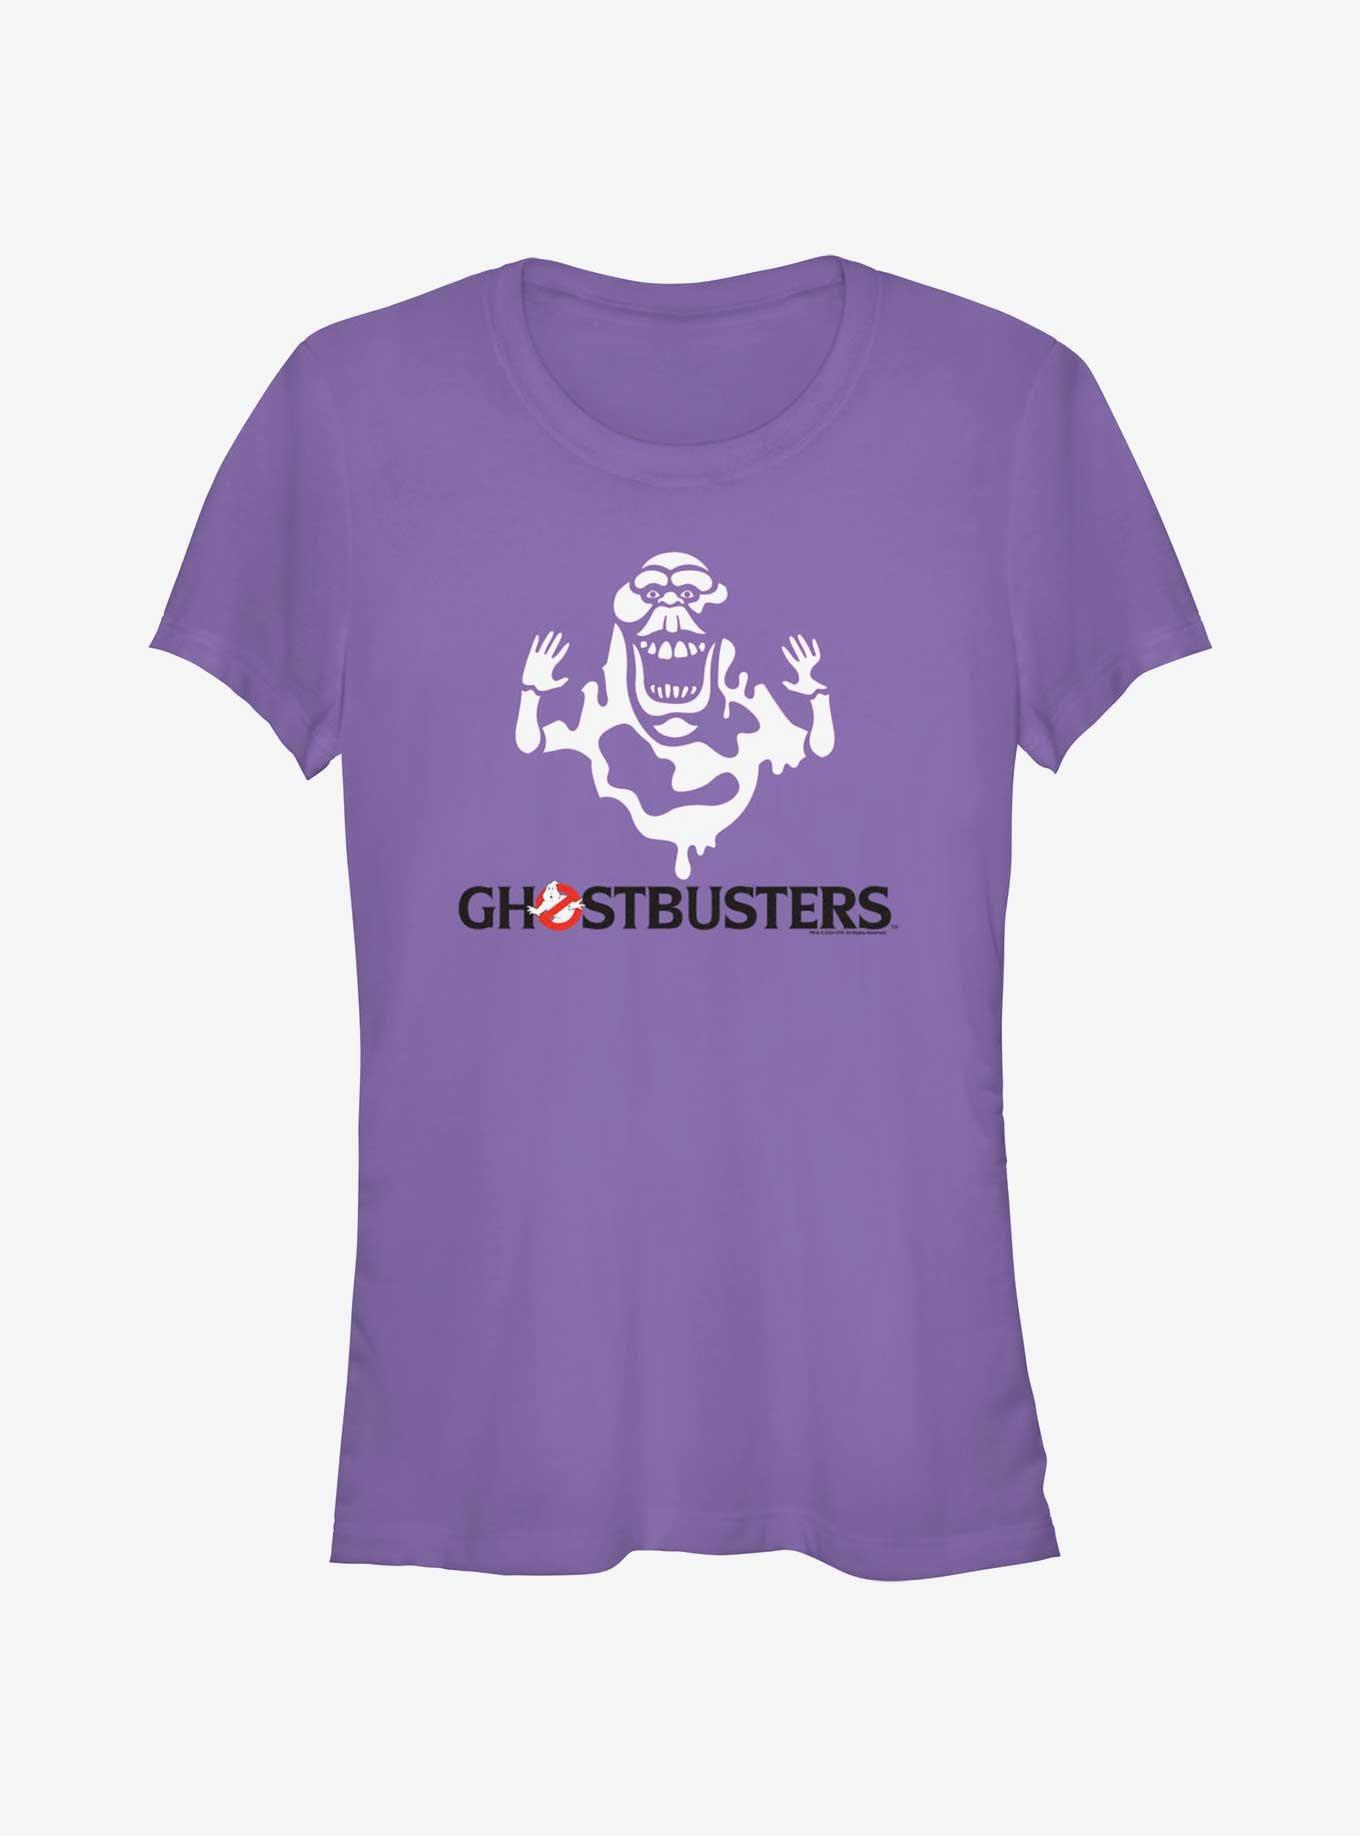 Ghostbusters: Frozen Empire Decal Slimer Girls T-Shirt